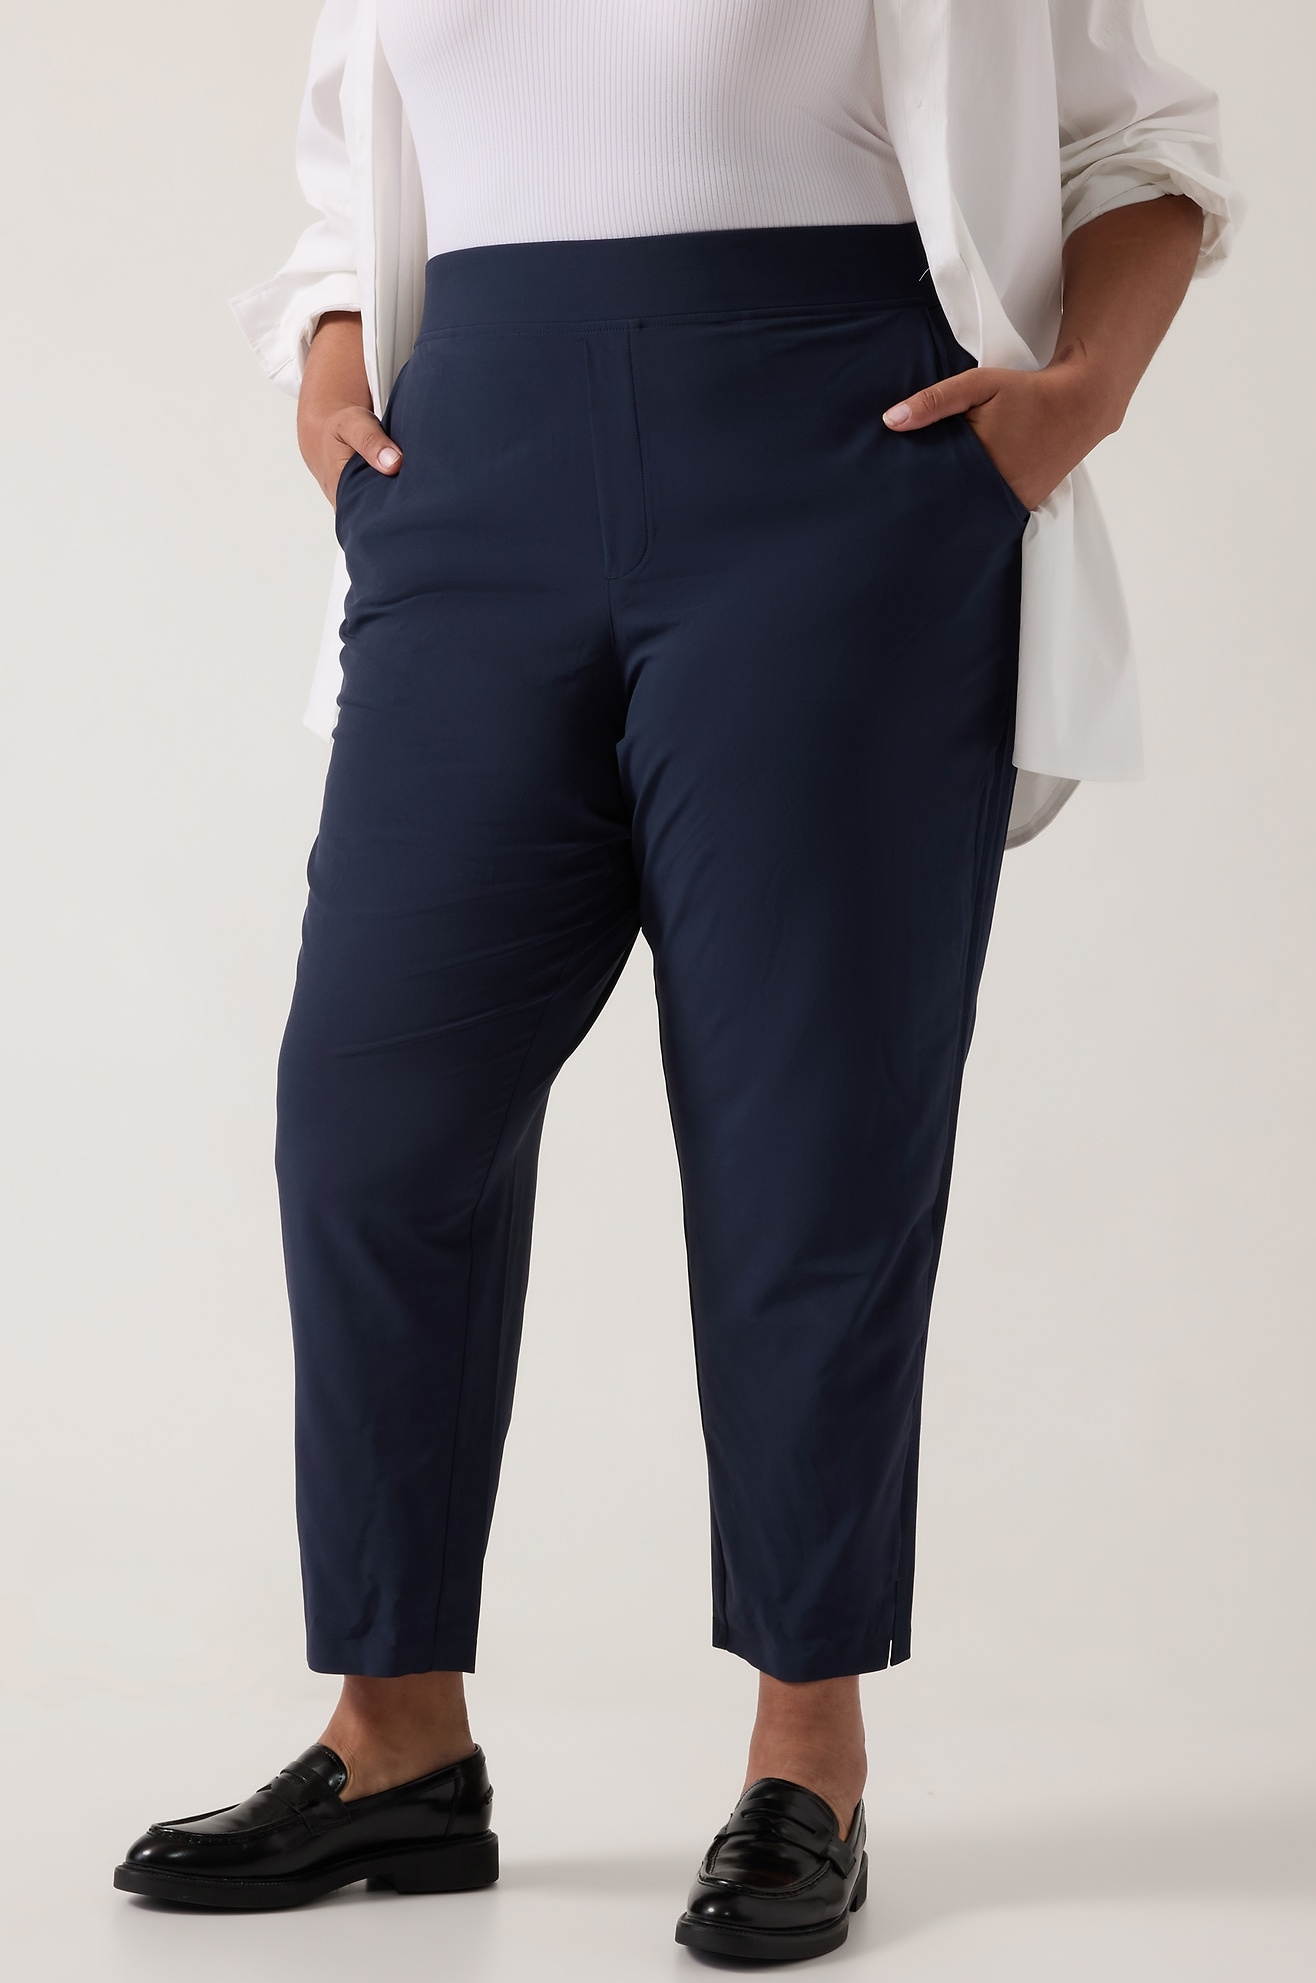 Kingsize Men's Big & Tall Relaxed Fit Wrinkle-free Expandable Waist Plain  Front Pants - Big - 72 38, Blue : Target